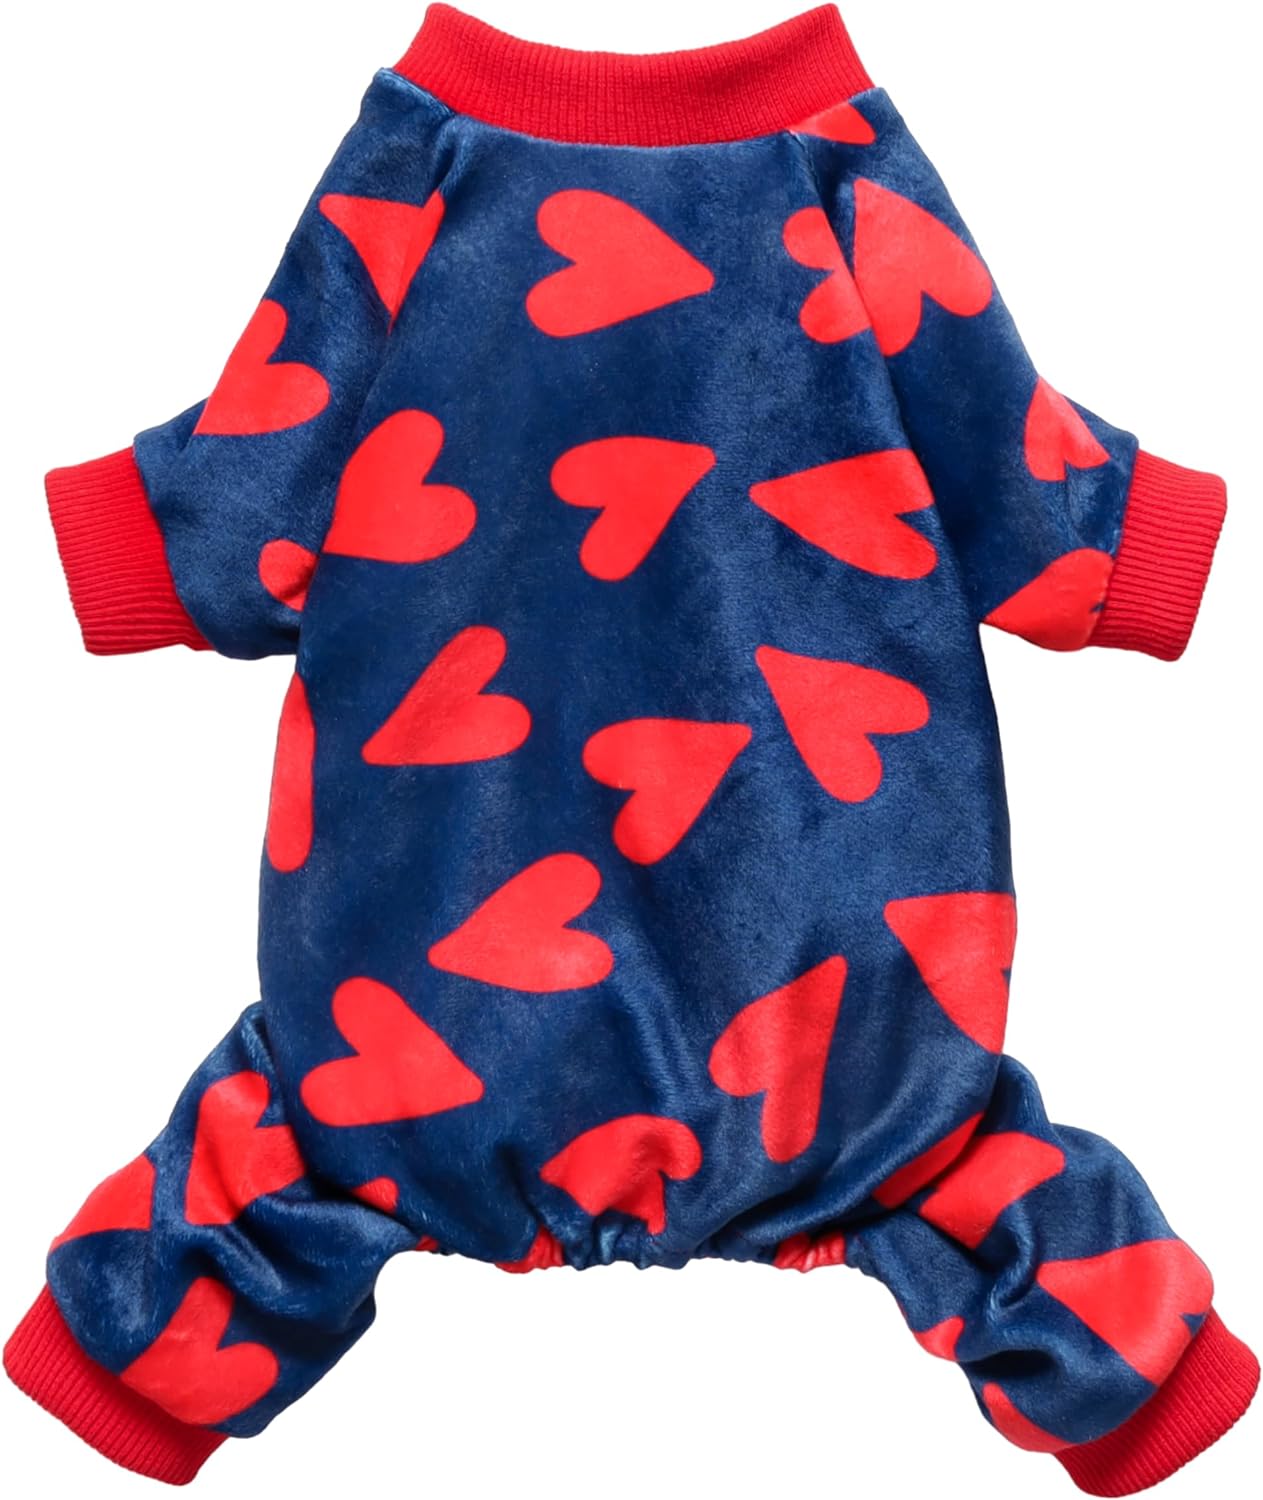 Fitwarm Valentine's Day Sweet Hearts Dog Pajamas